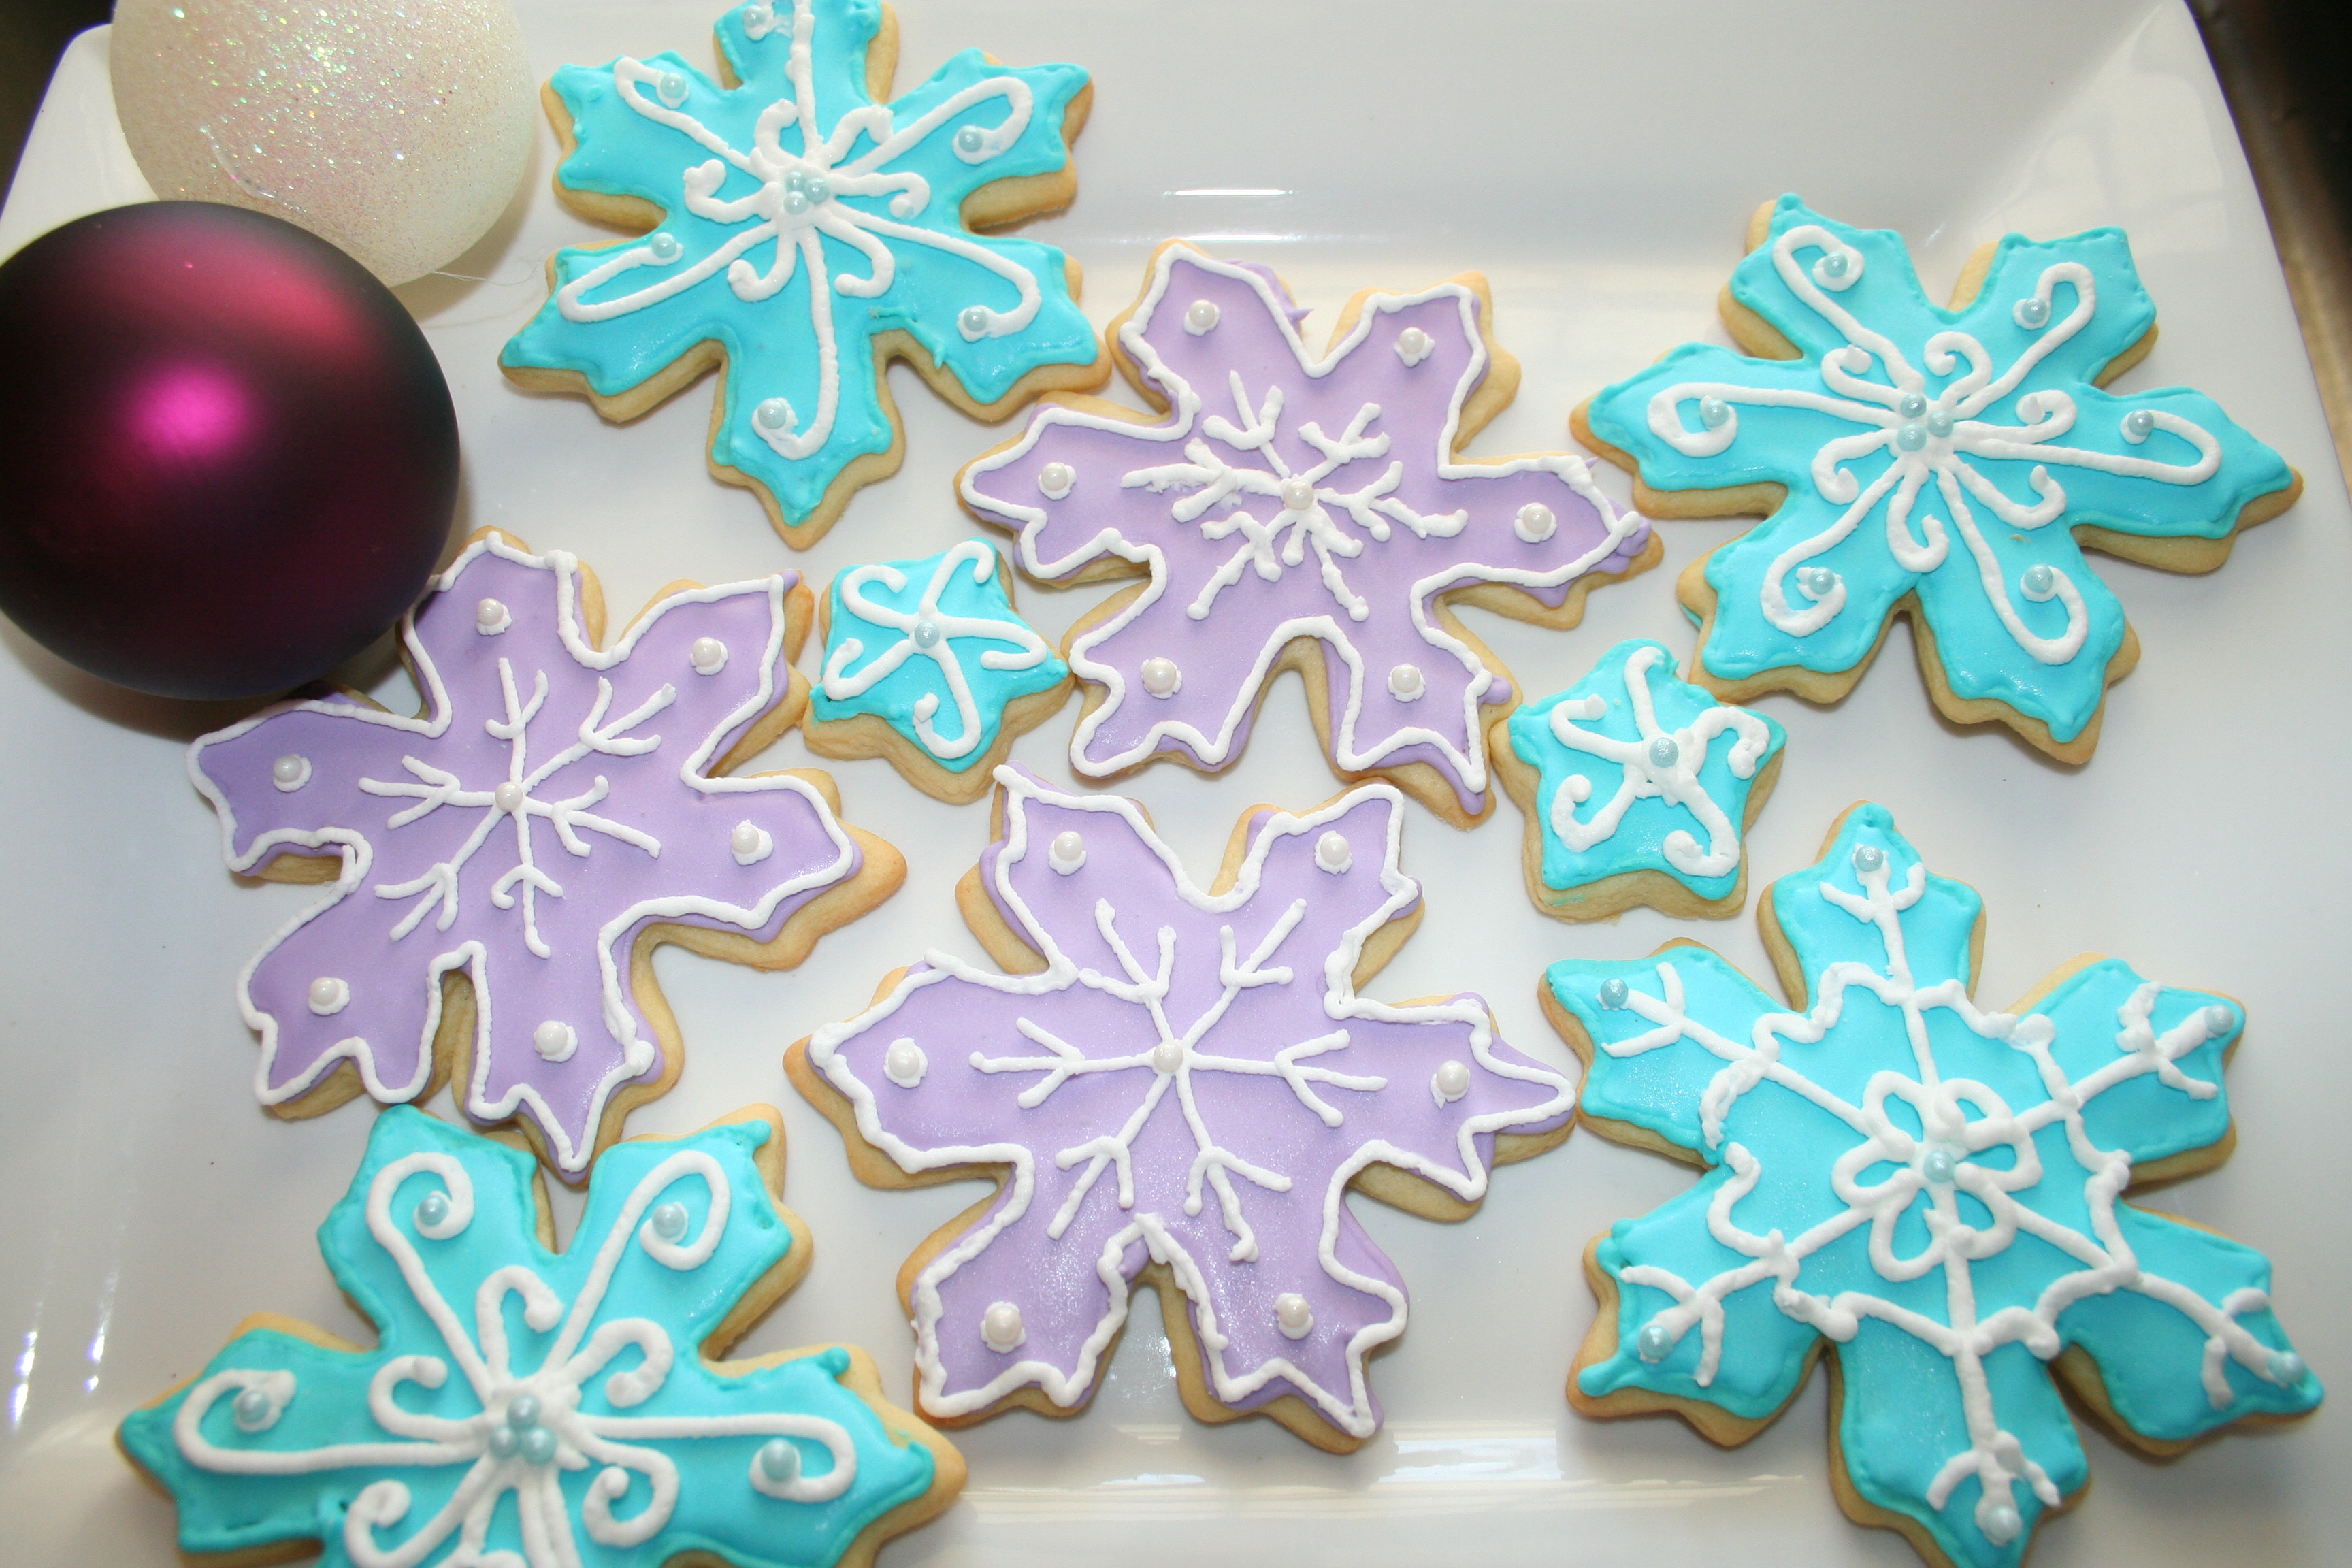 Decorated Christmas Sugar Cookies
 Ultimate Sugar Cookies – Decorated for Christmas